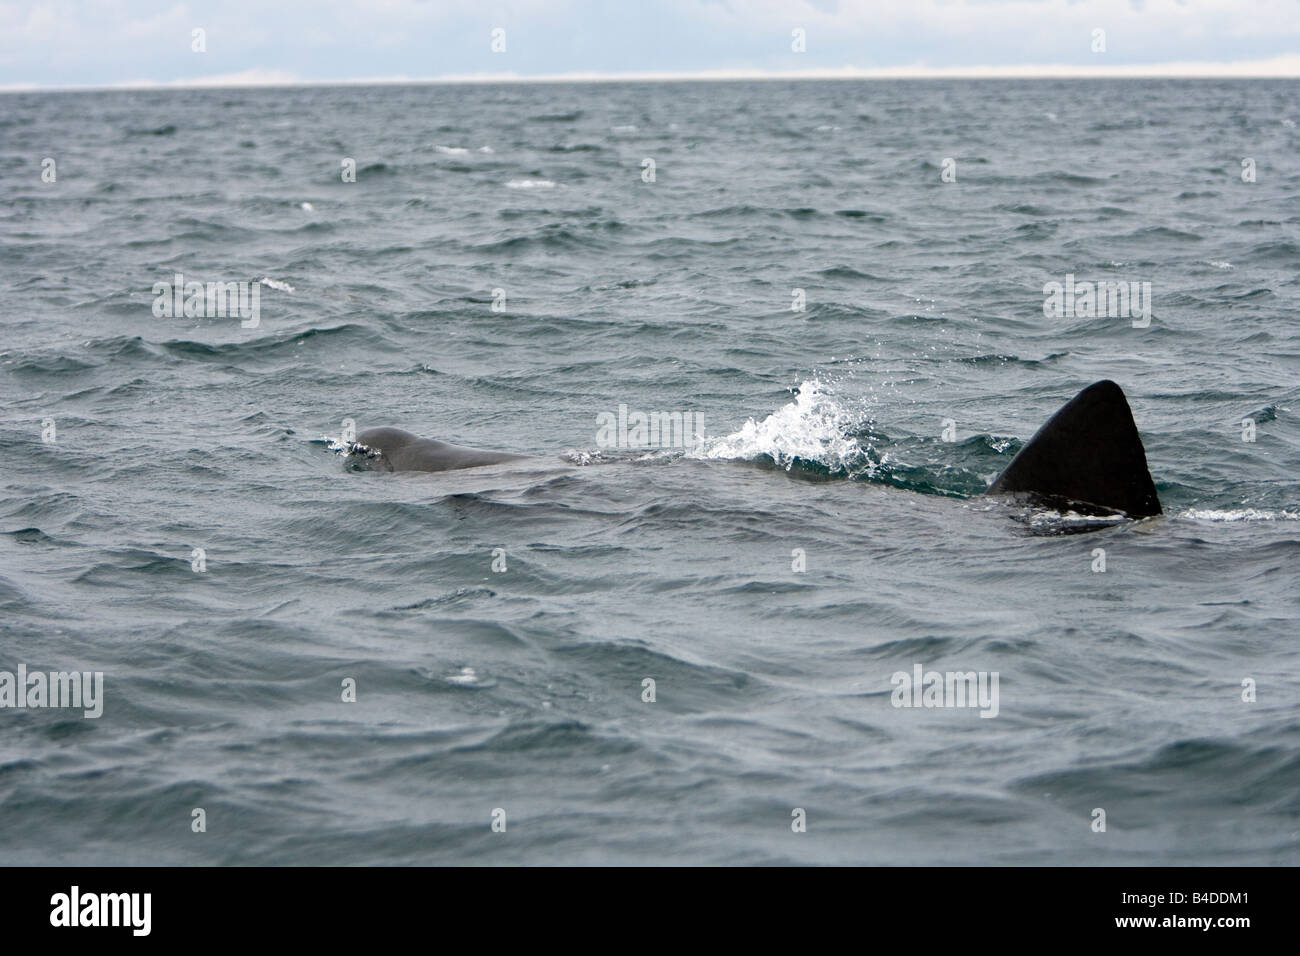 Le requin pèlerin Cetorhinus maximus Riesenhai Gairloch Ecosse Banque D'Images